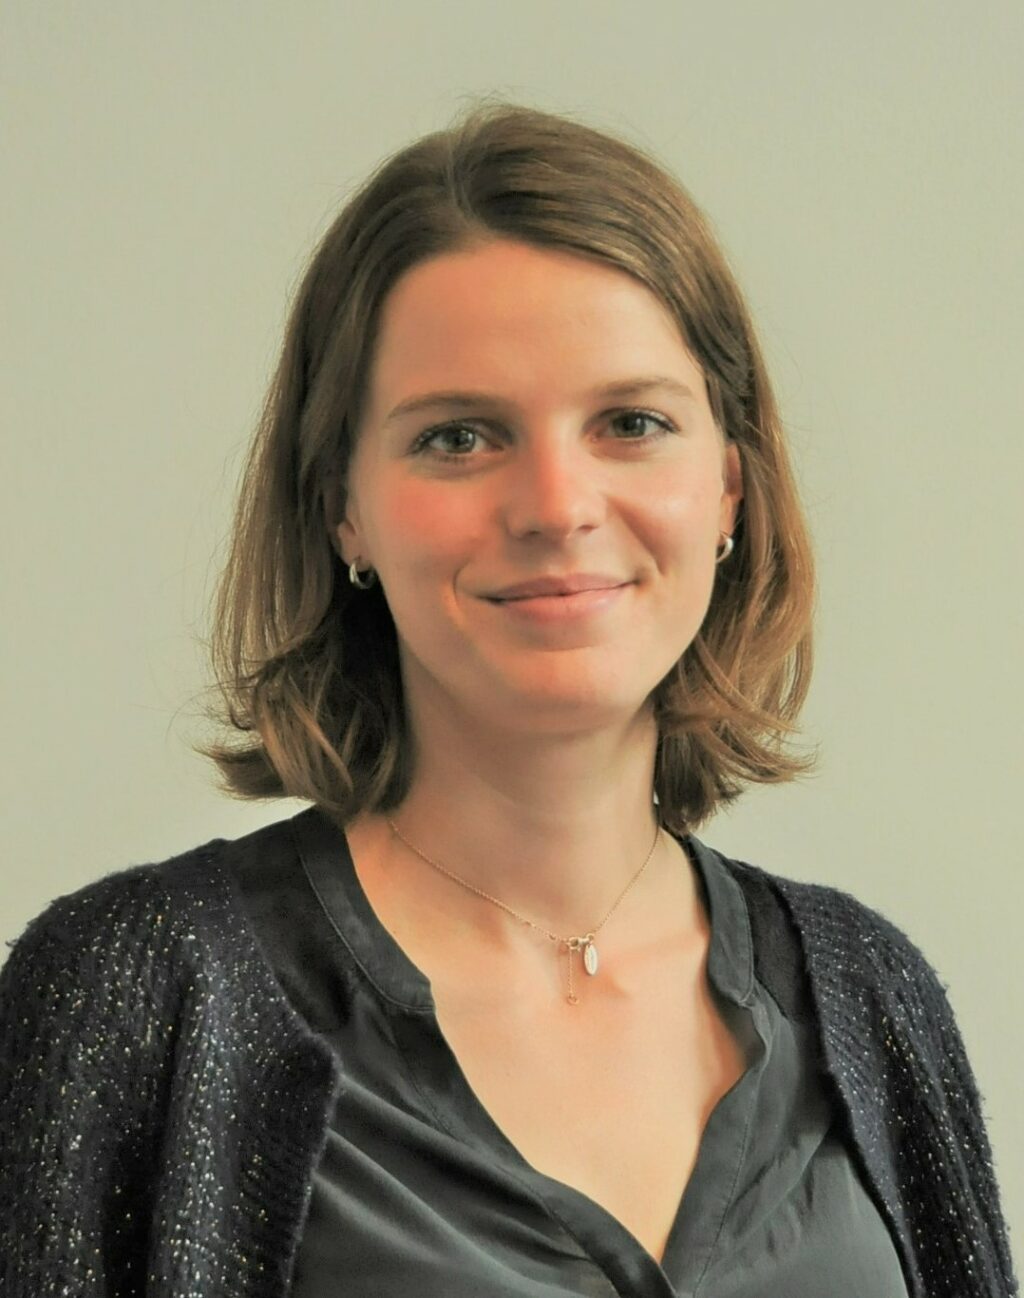 Manon Vanderhaeghe